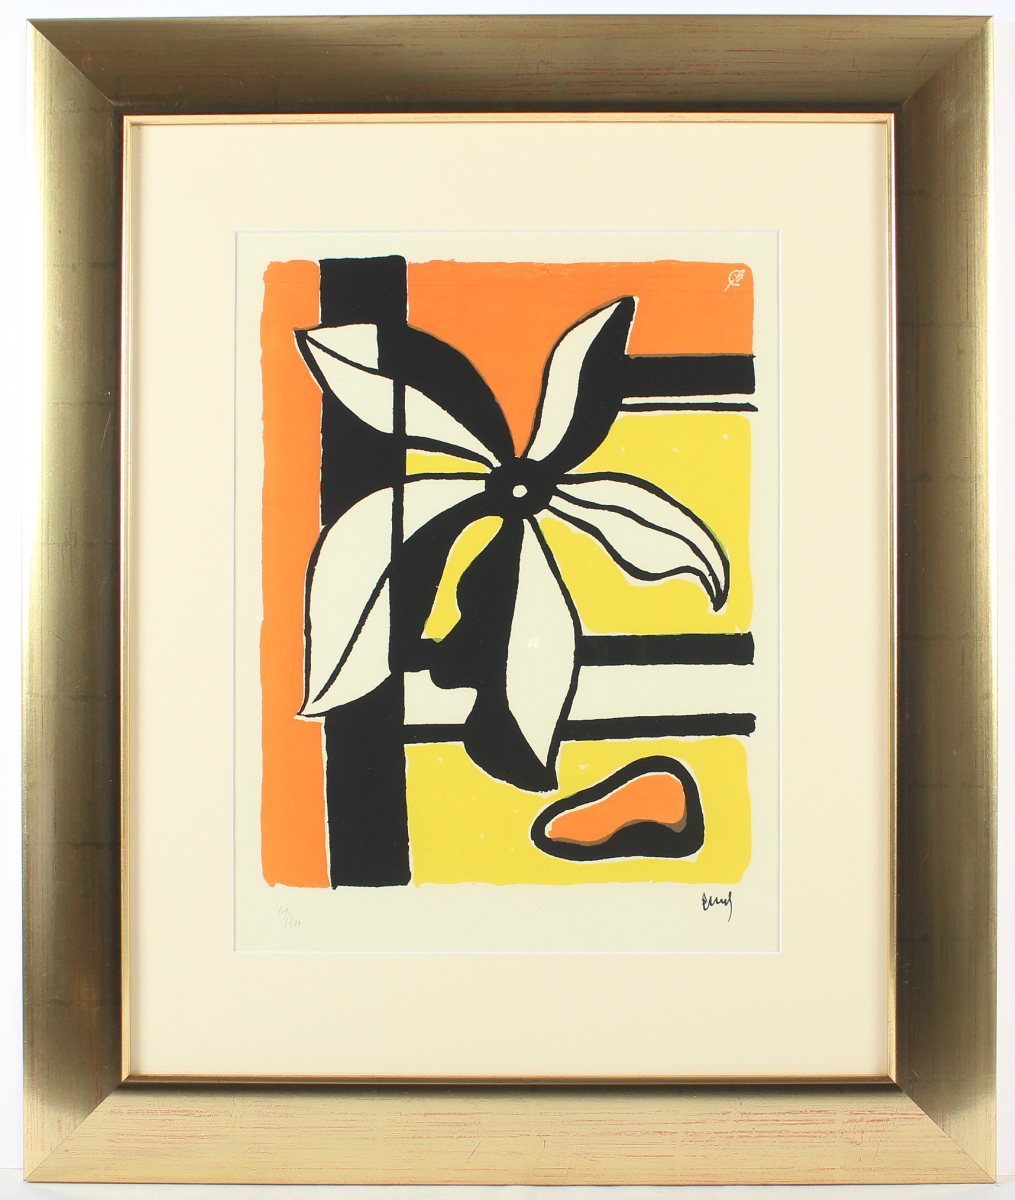 LEGER, Fernand, "La fleur", Farbserigrafie, 32 x 25, 1954, nummeriert und signiert, WV Saphire E - Image 2 of 2